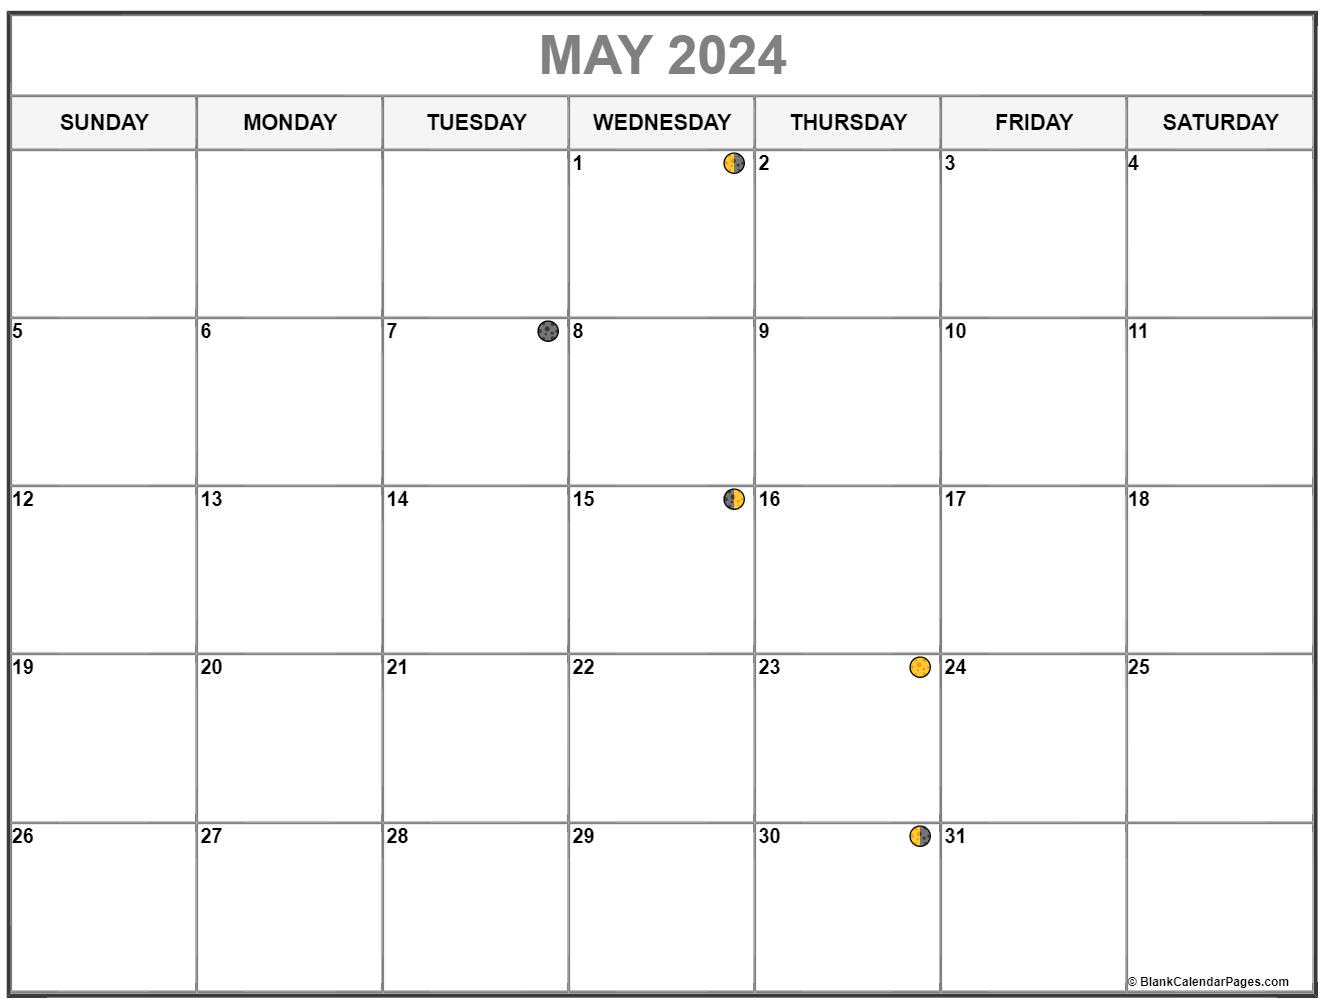 Lunar Calendar May 2022 May 2022 Lunar Calendar | Moon Phase Calendar